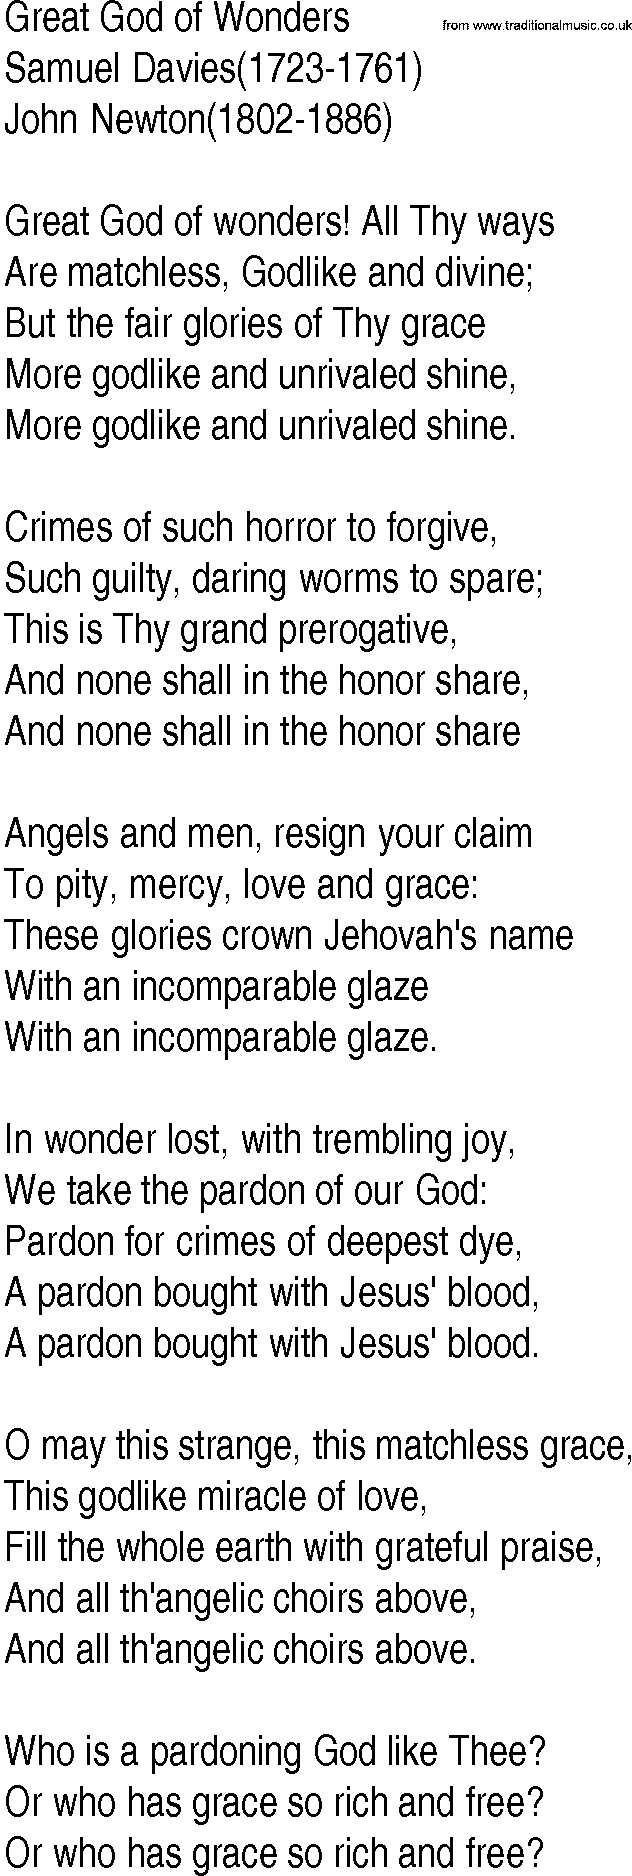 Hymn and Gospel Song: Great God of Wonders by Samuel Davies lyrics